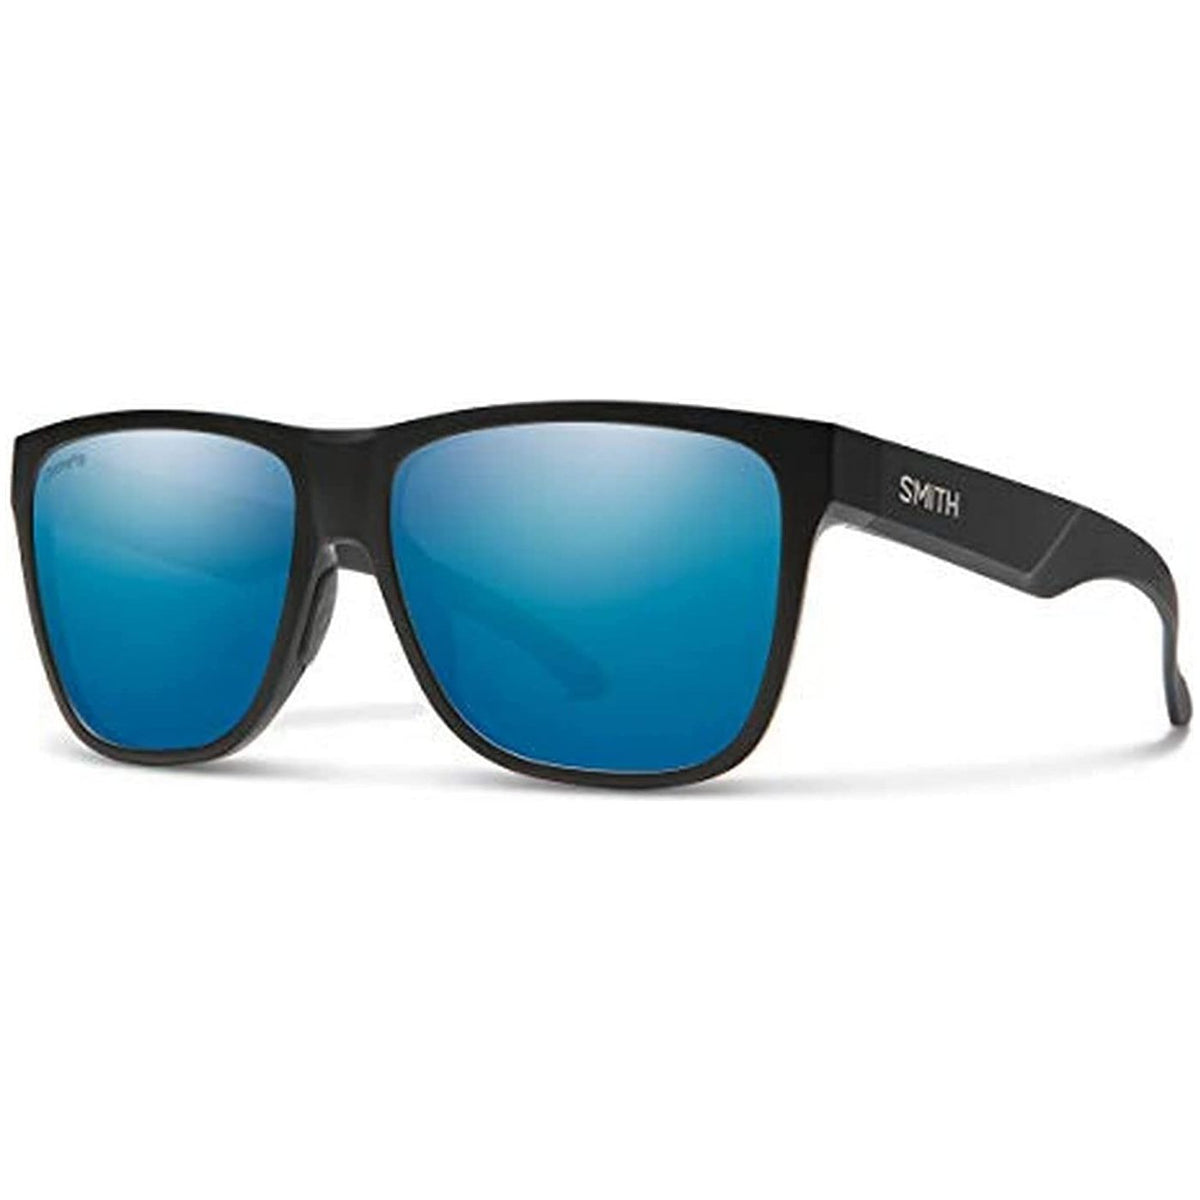 Smith Optics Lowdown XL 2 Sunglasses